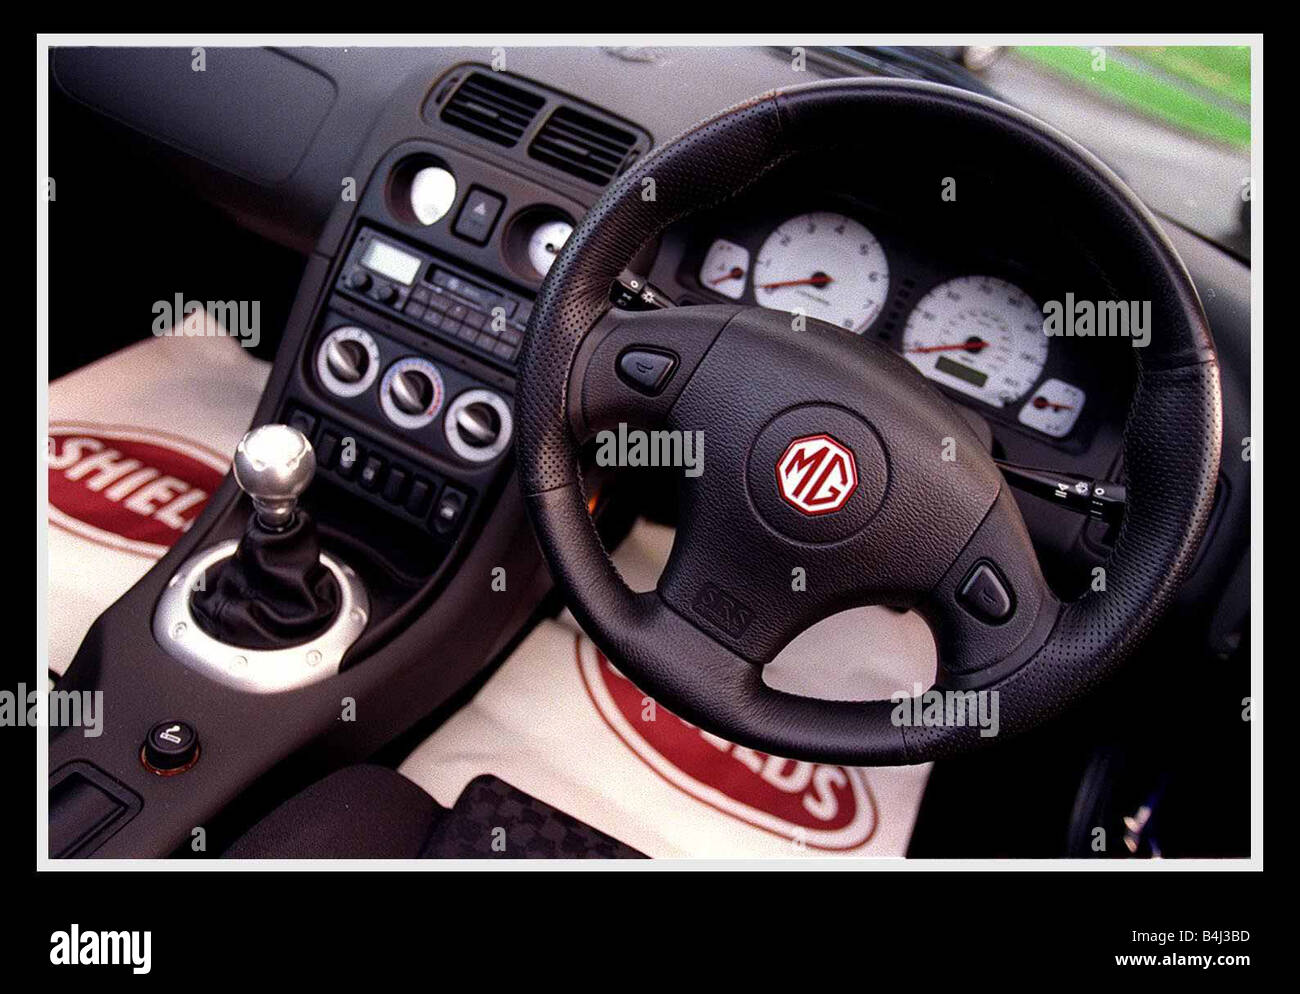 MG MGF December 1999 Steering wheel dashboard interior cockpit MG logo badge Stock Photo